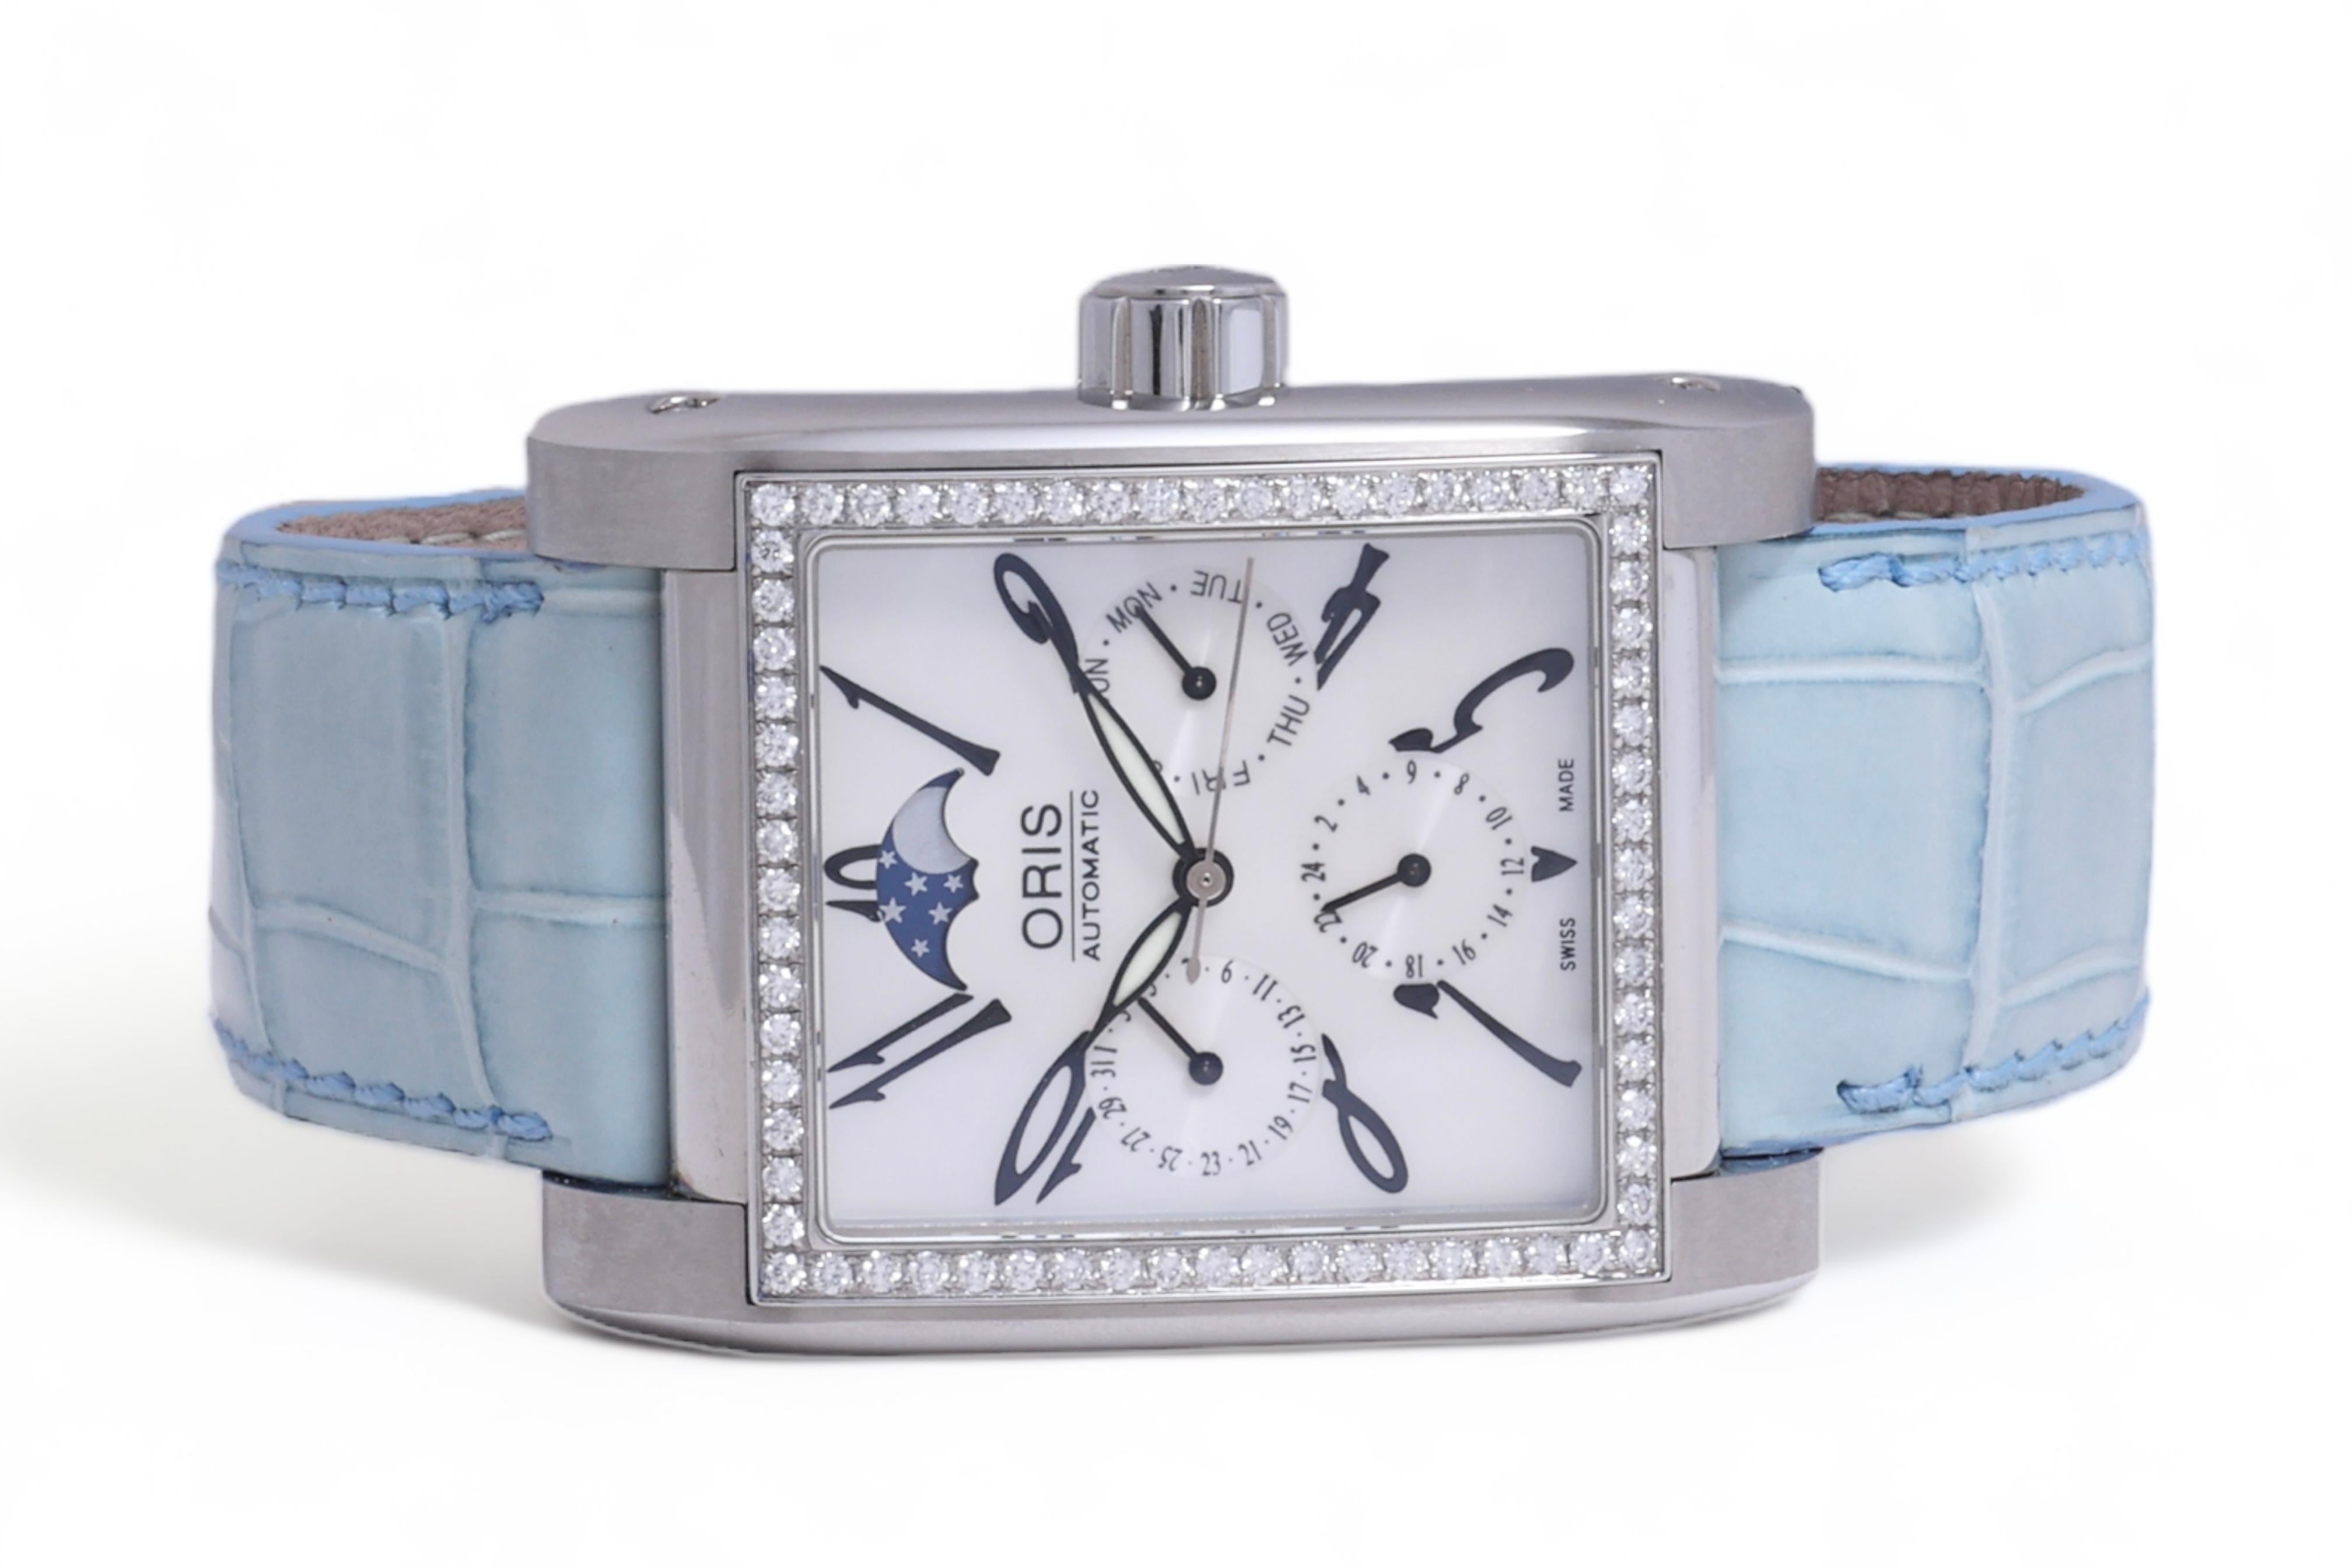 Brilliant Cut New Oris Automatic Rectangular Miles Complication Moonphase Diamond Watch For Sale